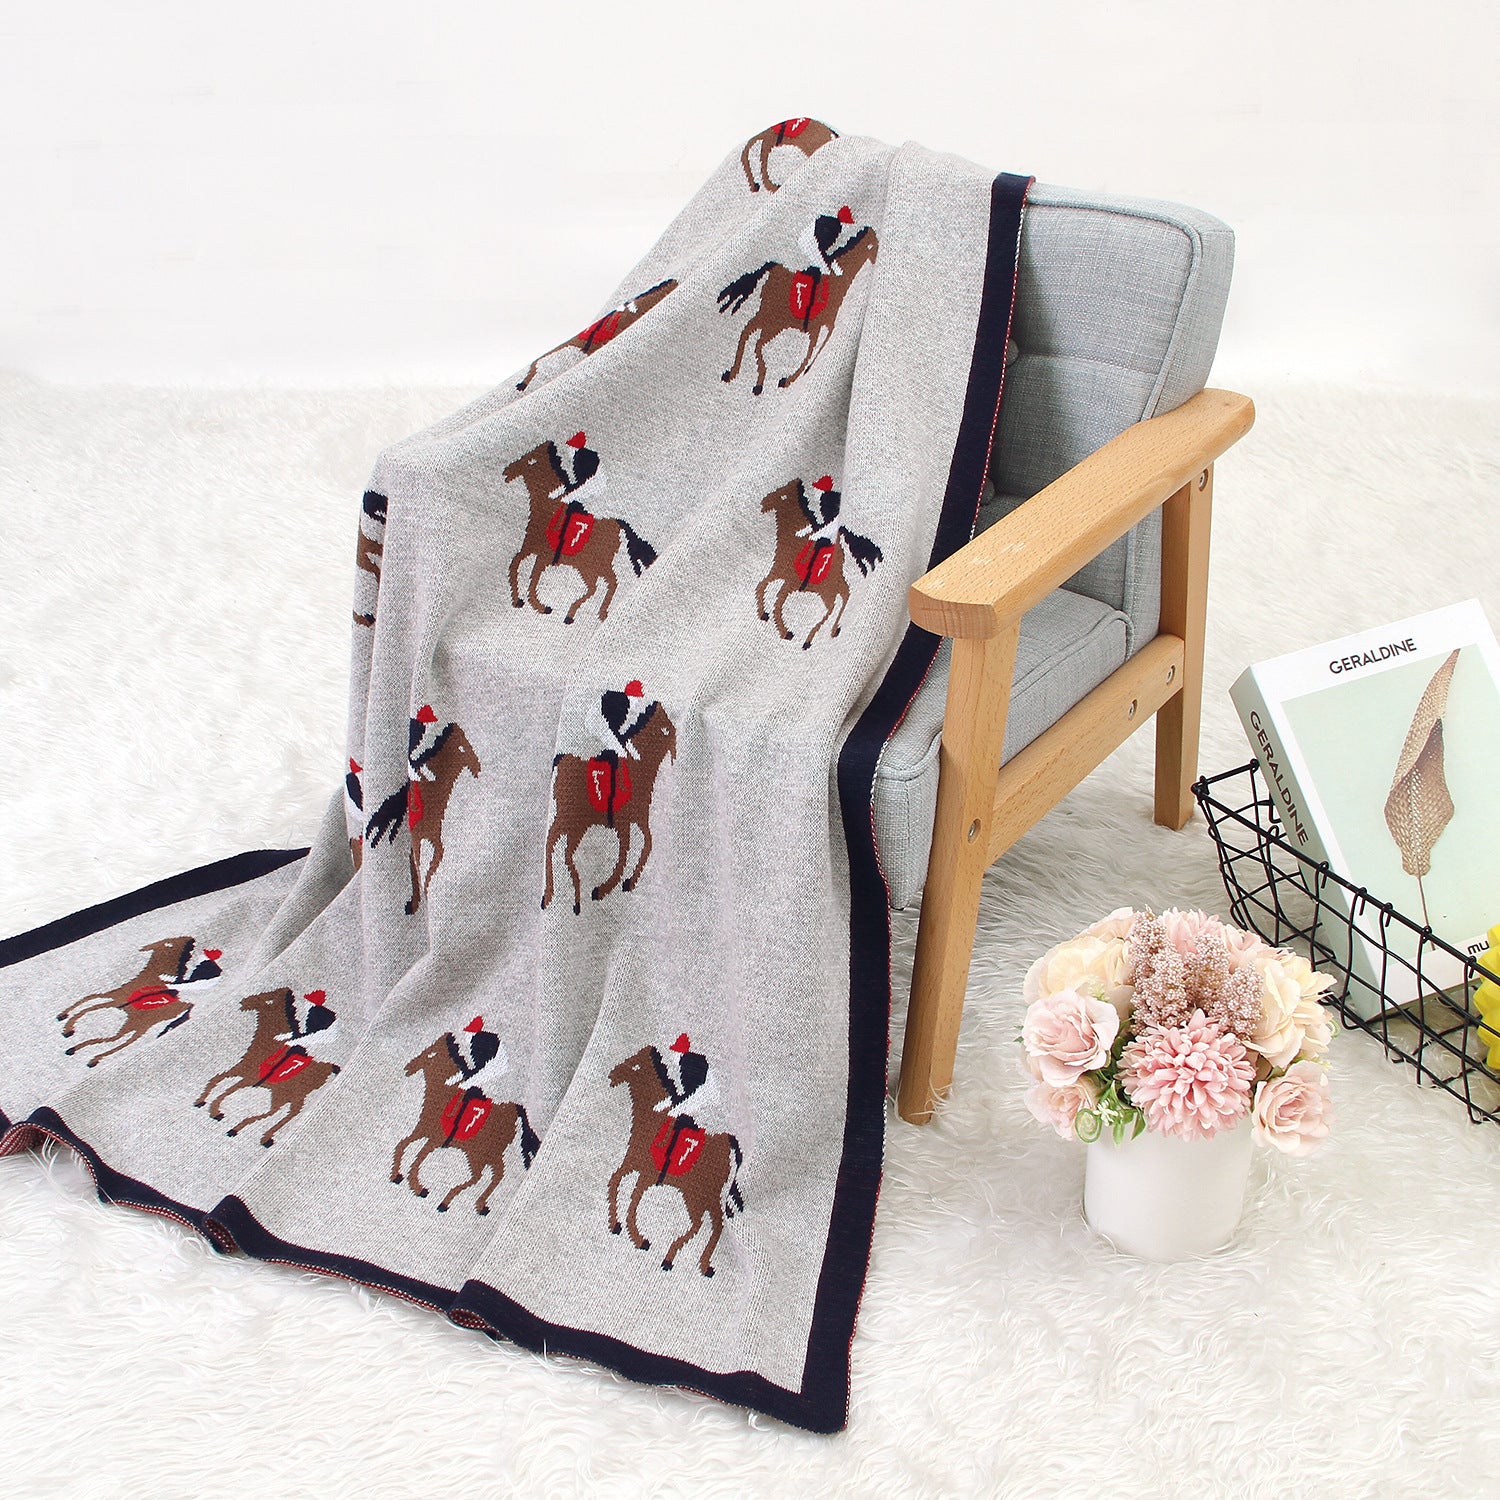 Snuggletime Essentials: Multi-Use Baby Blanket & Wrap